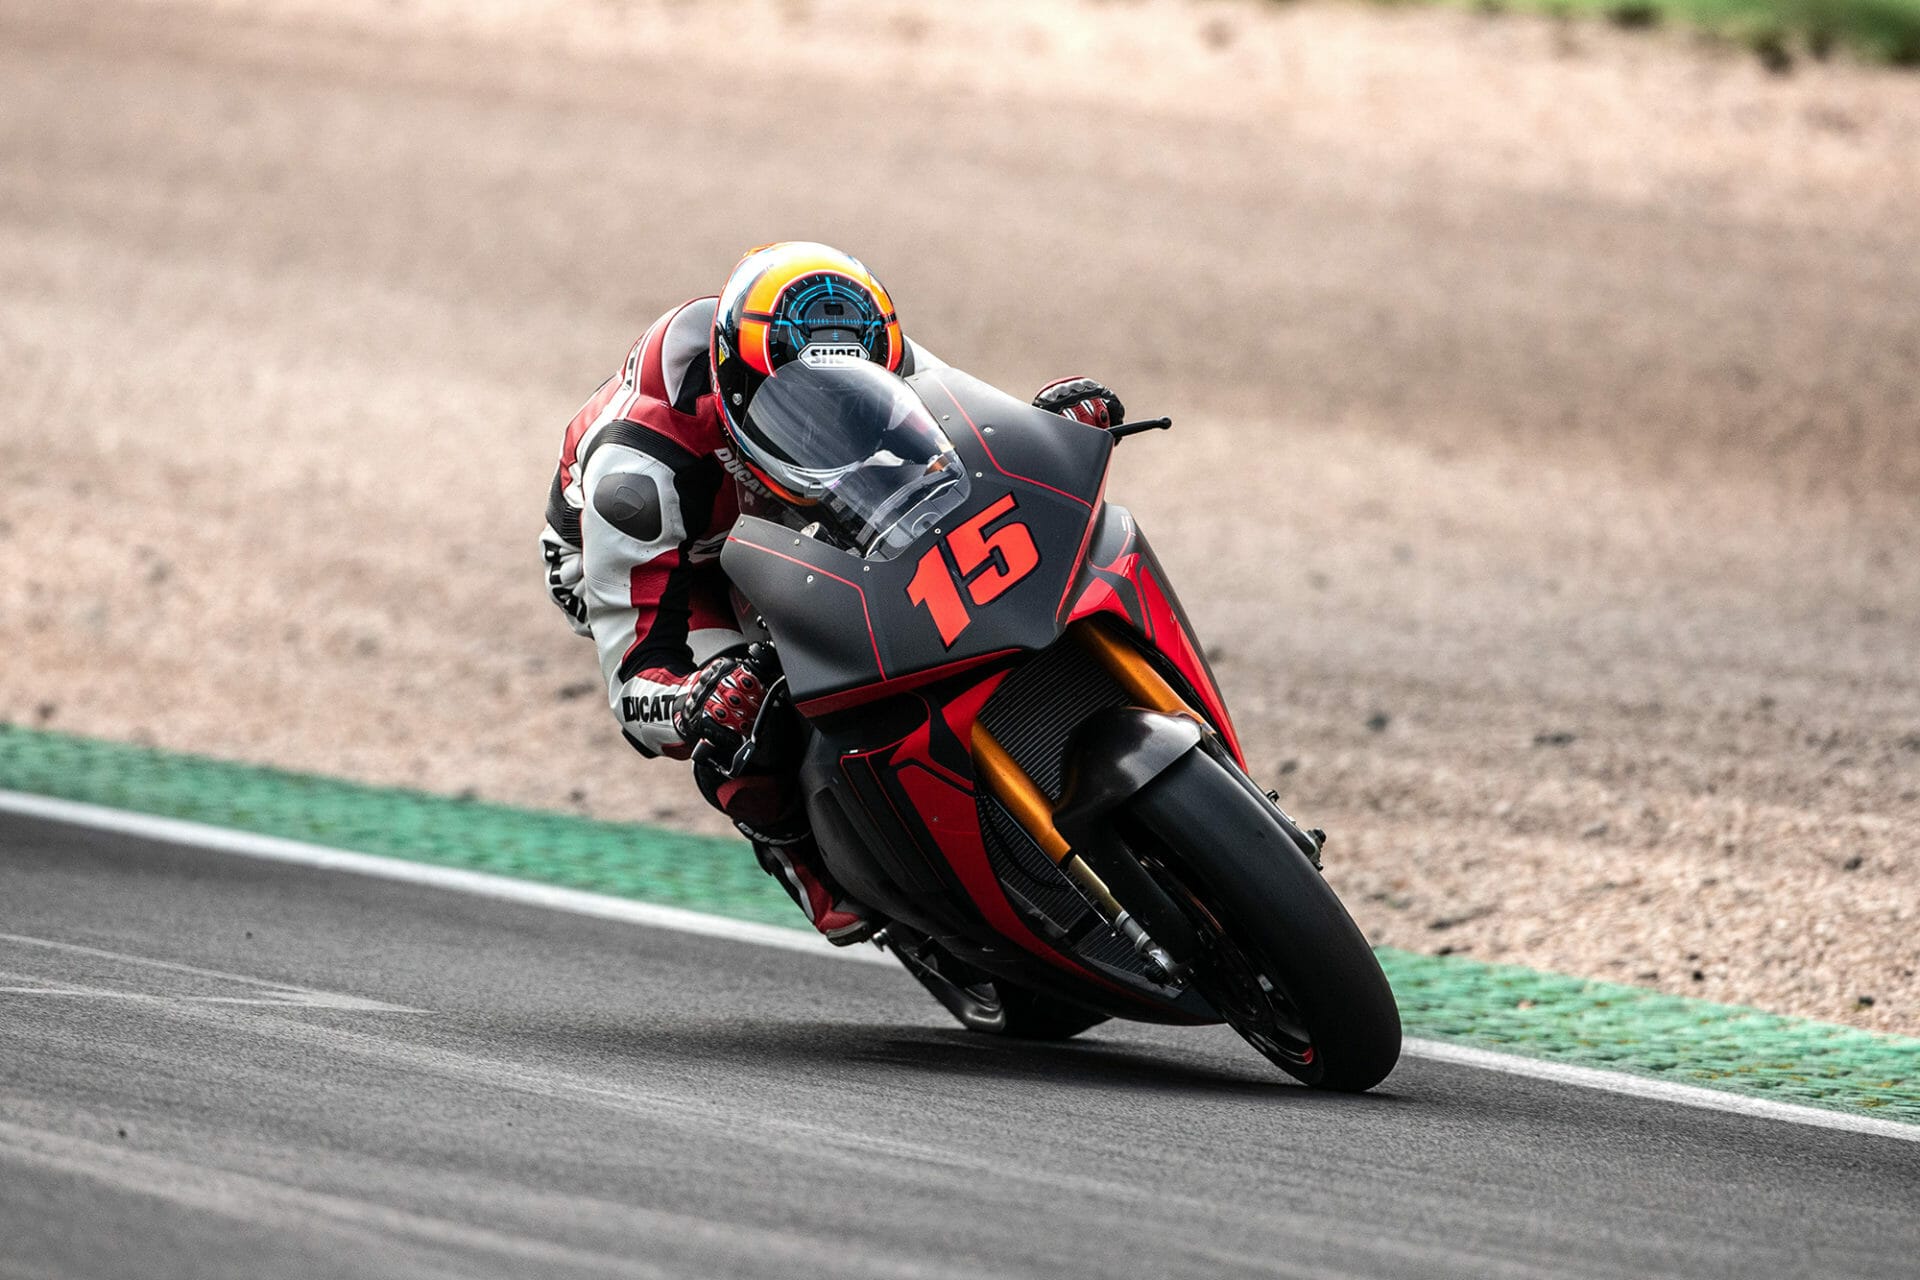 Ducati E-Prototyp in Action - MOTORCYCLES.NEWS via @motorradnachrichten